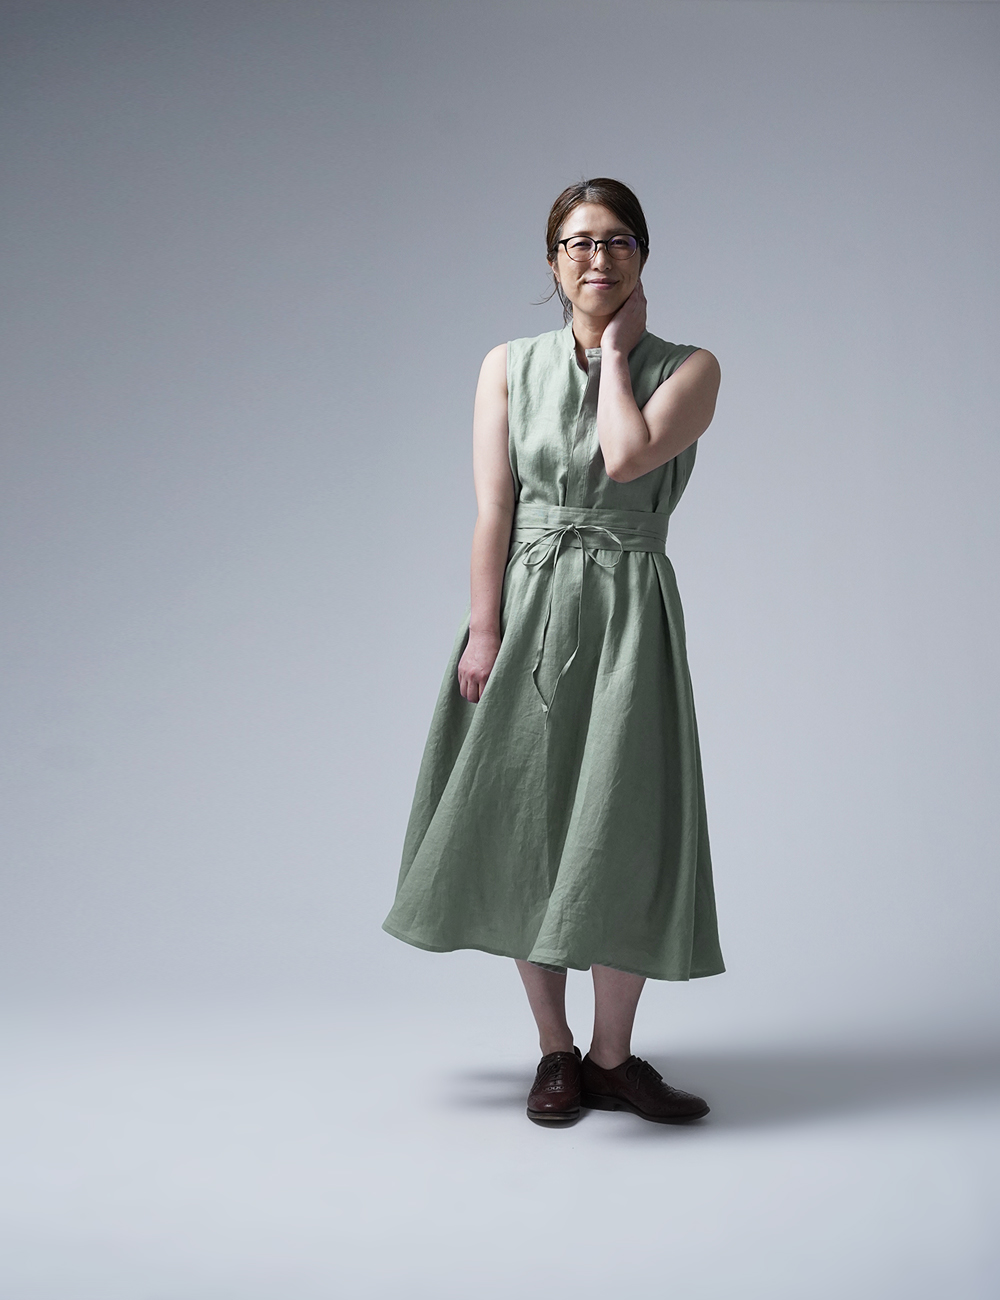 【wafu】Linen dress  リネンワンピーススタンドカラー ノースリーブ ドレス / 青磁鼠(せいじねず) a019e-snz1